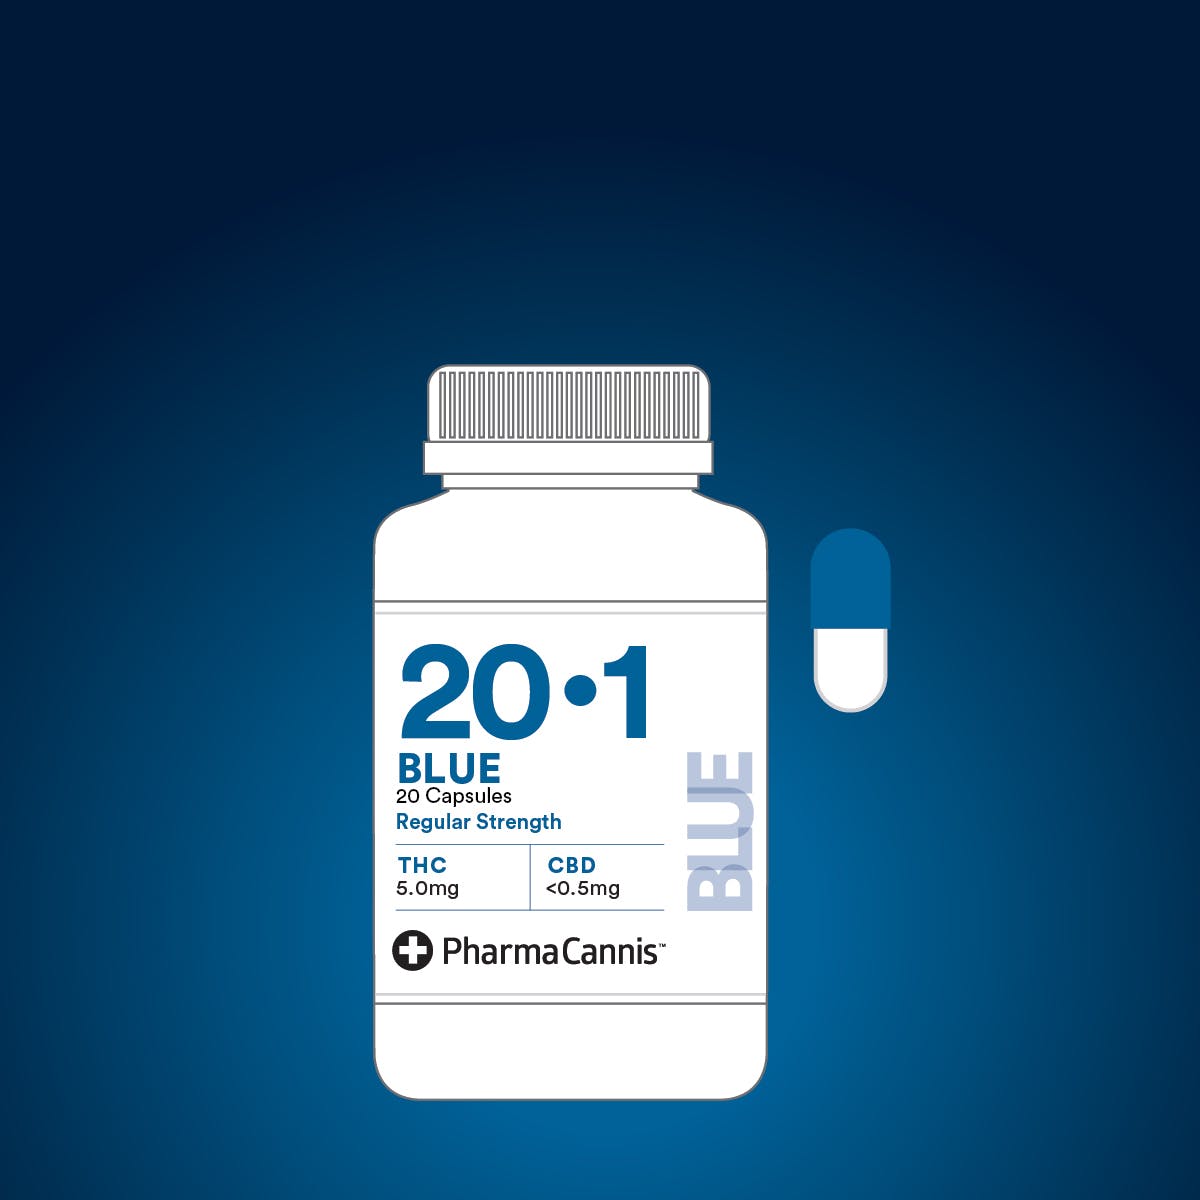 edible-pharmacann-blue-regular-strength-capsule-201-20ct